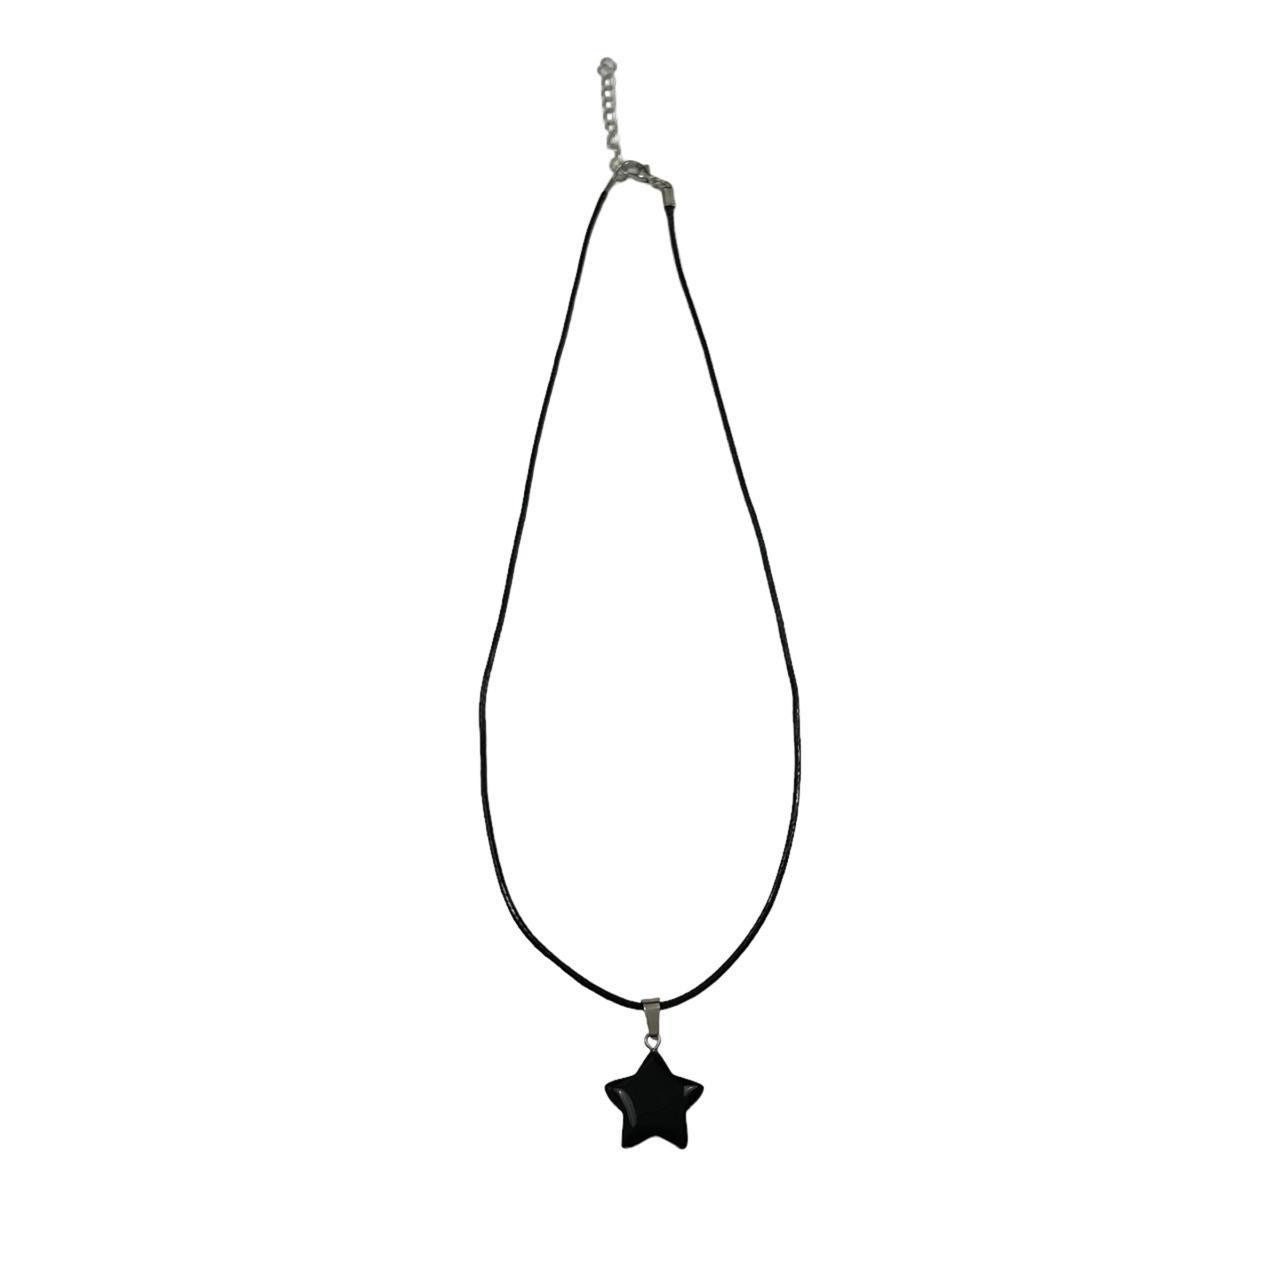 Black Star Necklace Black Cord Necklace Handmade Necklace 